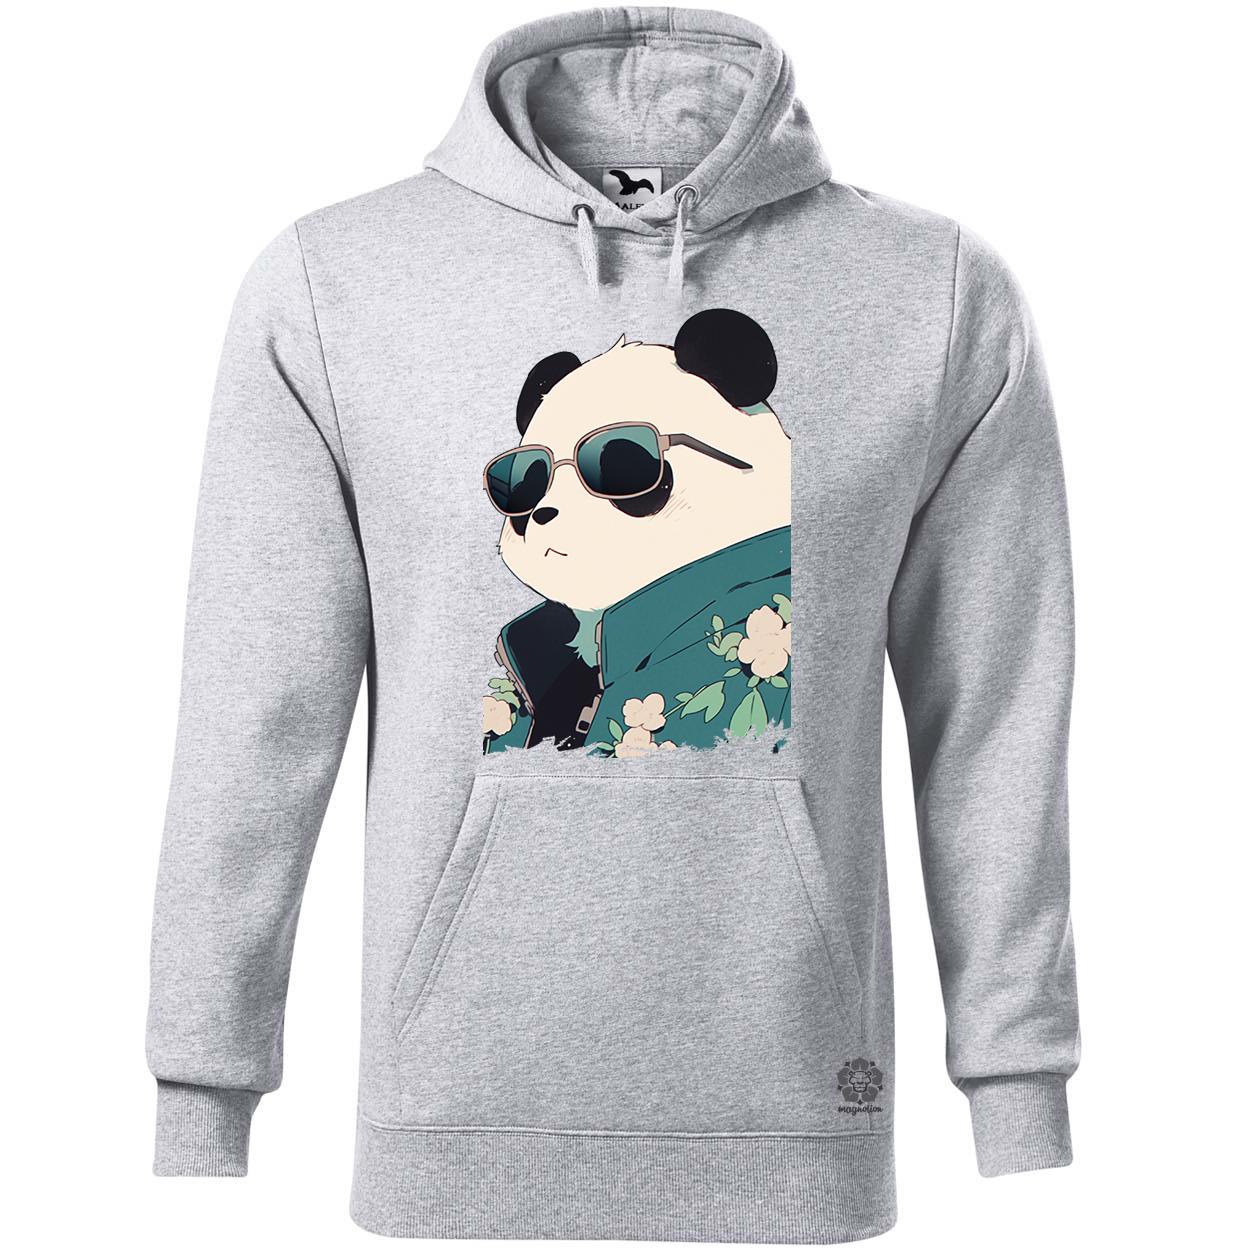 Laza napszemcsis panda v2